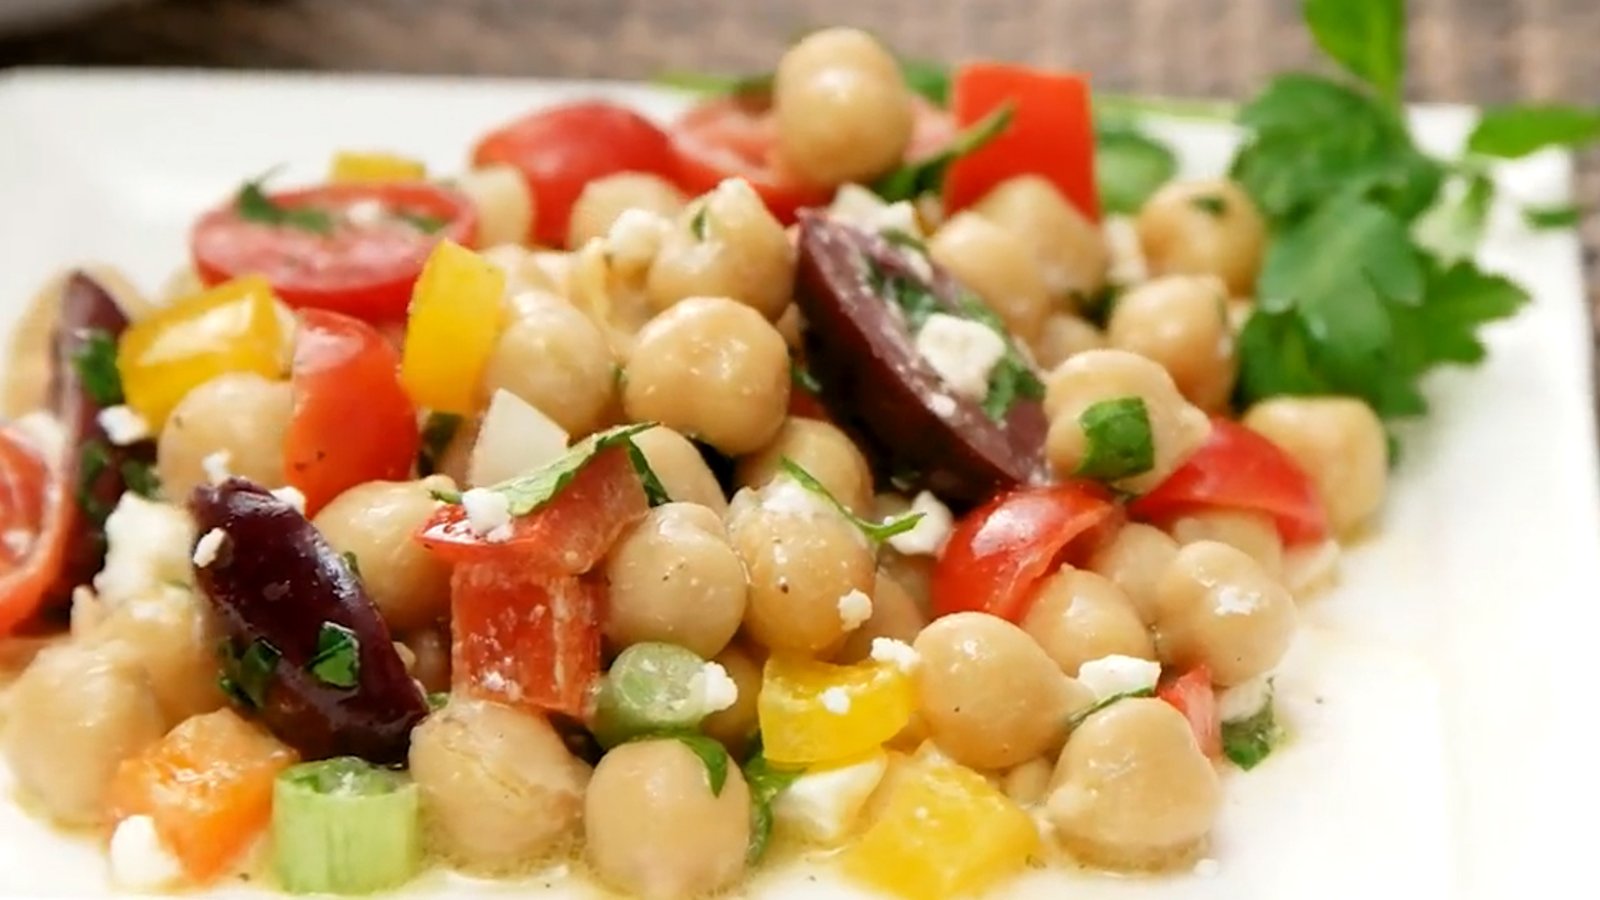 Salade grecque aux pois chiches - 5 ingredients 15 minutes